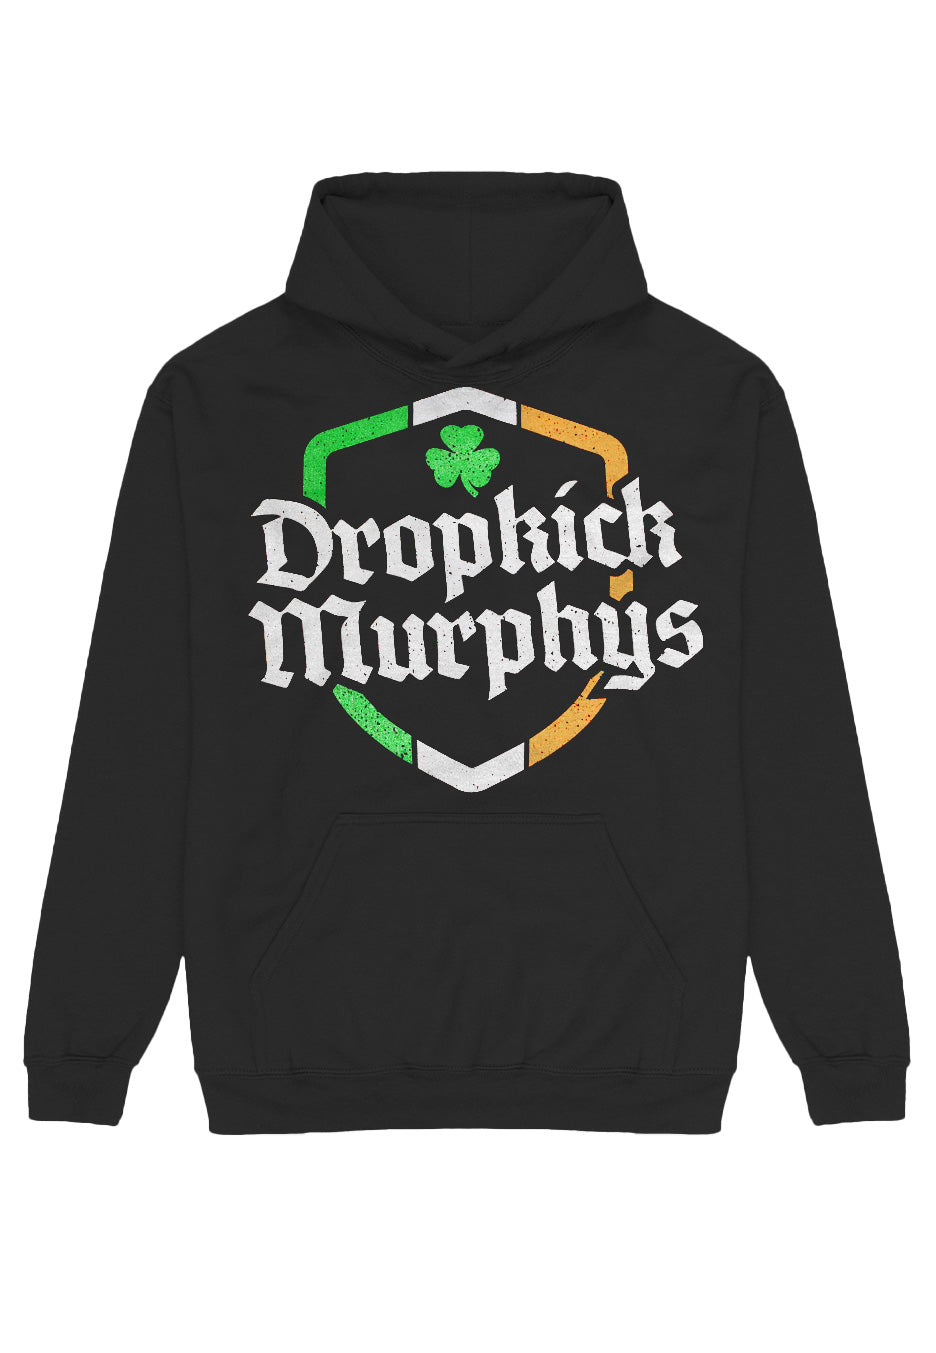 Dropkick Murphys - Ire Shield Black Heather - Hoodie